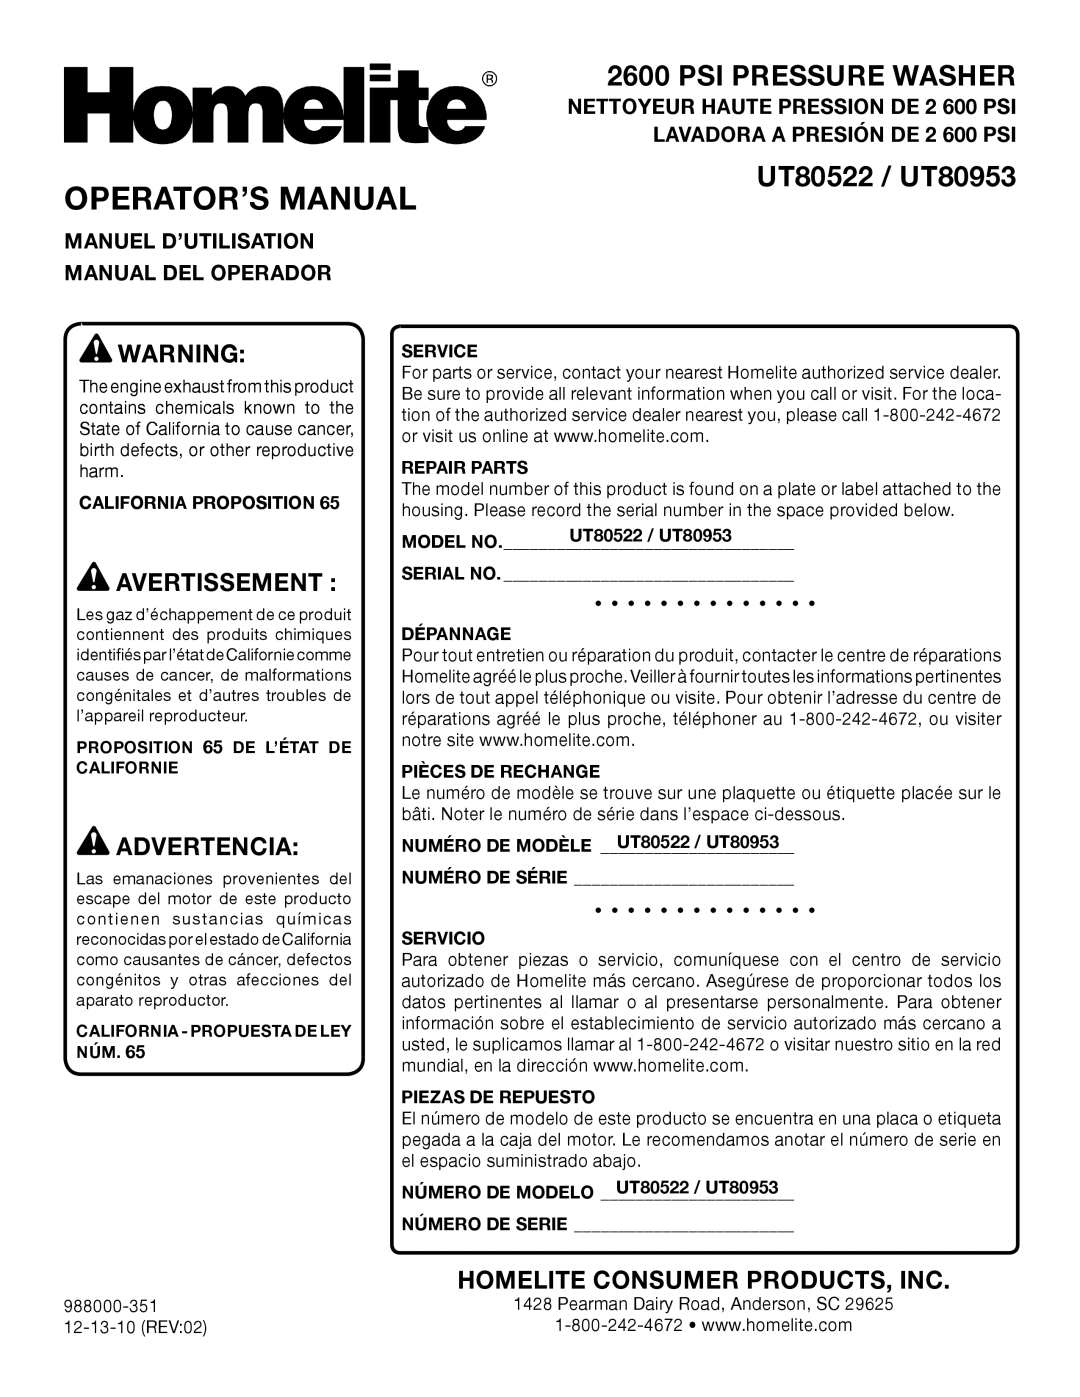 Homelite manuel dutilisation Operator’S Manual, Psi Pressure Washer, UT80522 / UT80953, Avertissement , Advertencia 